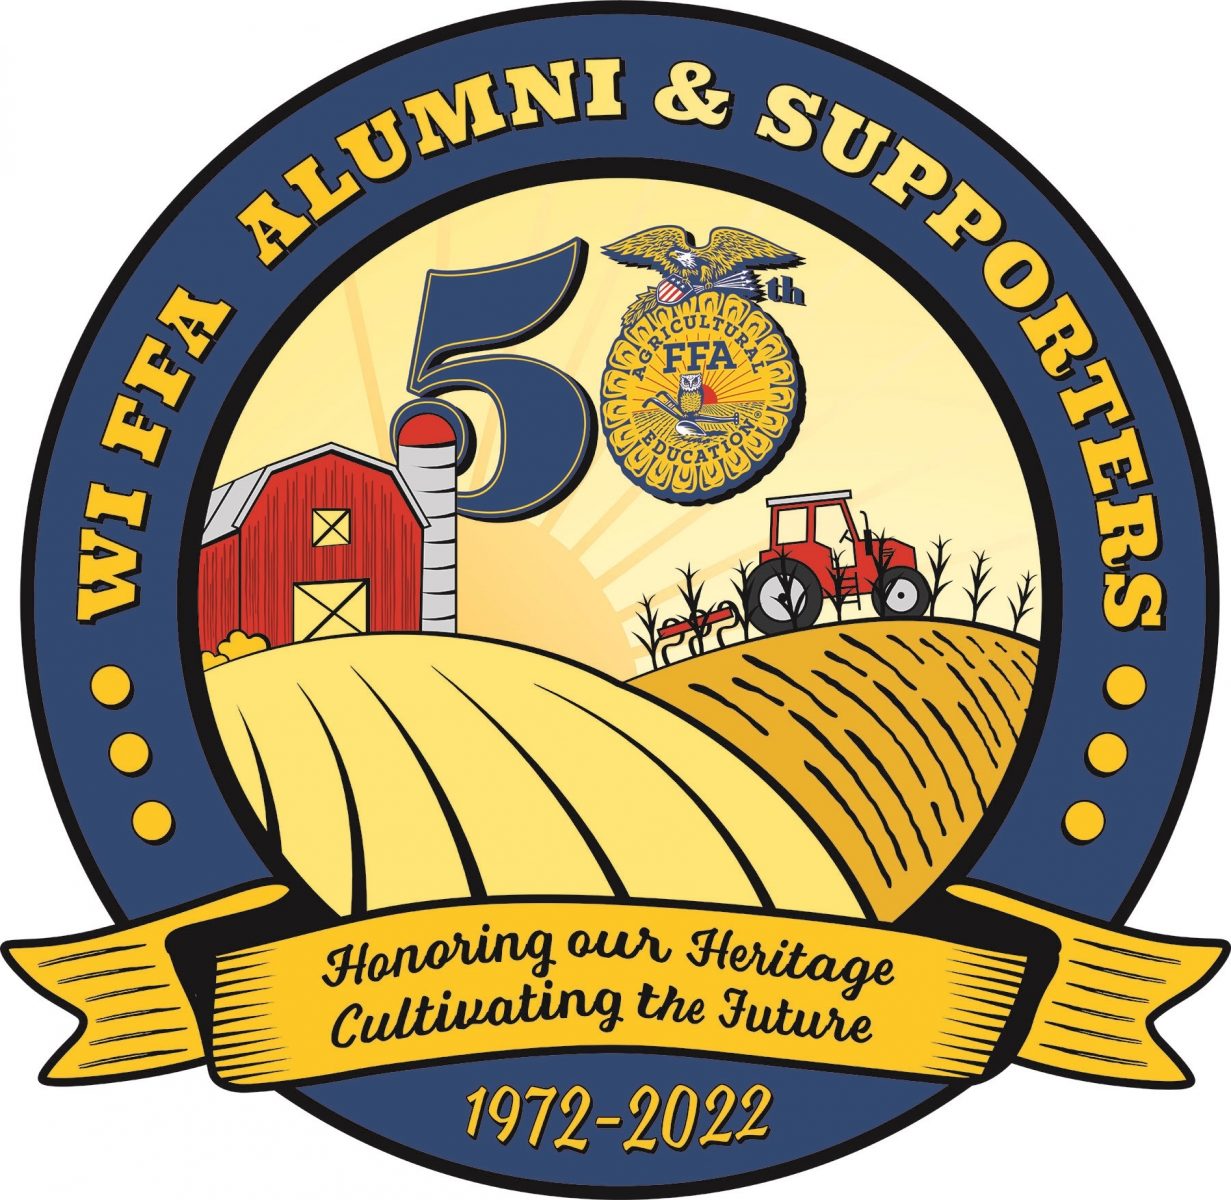 Wisconsin FFA Alumni & Supporters to celebrate their 50th Anniversary